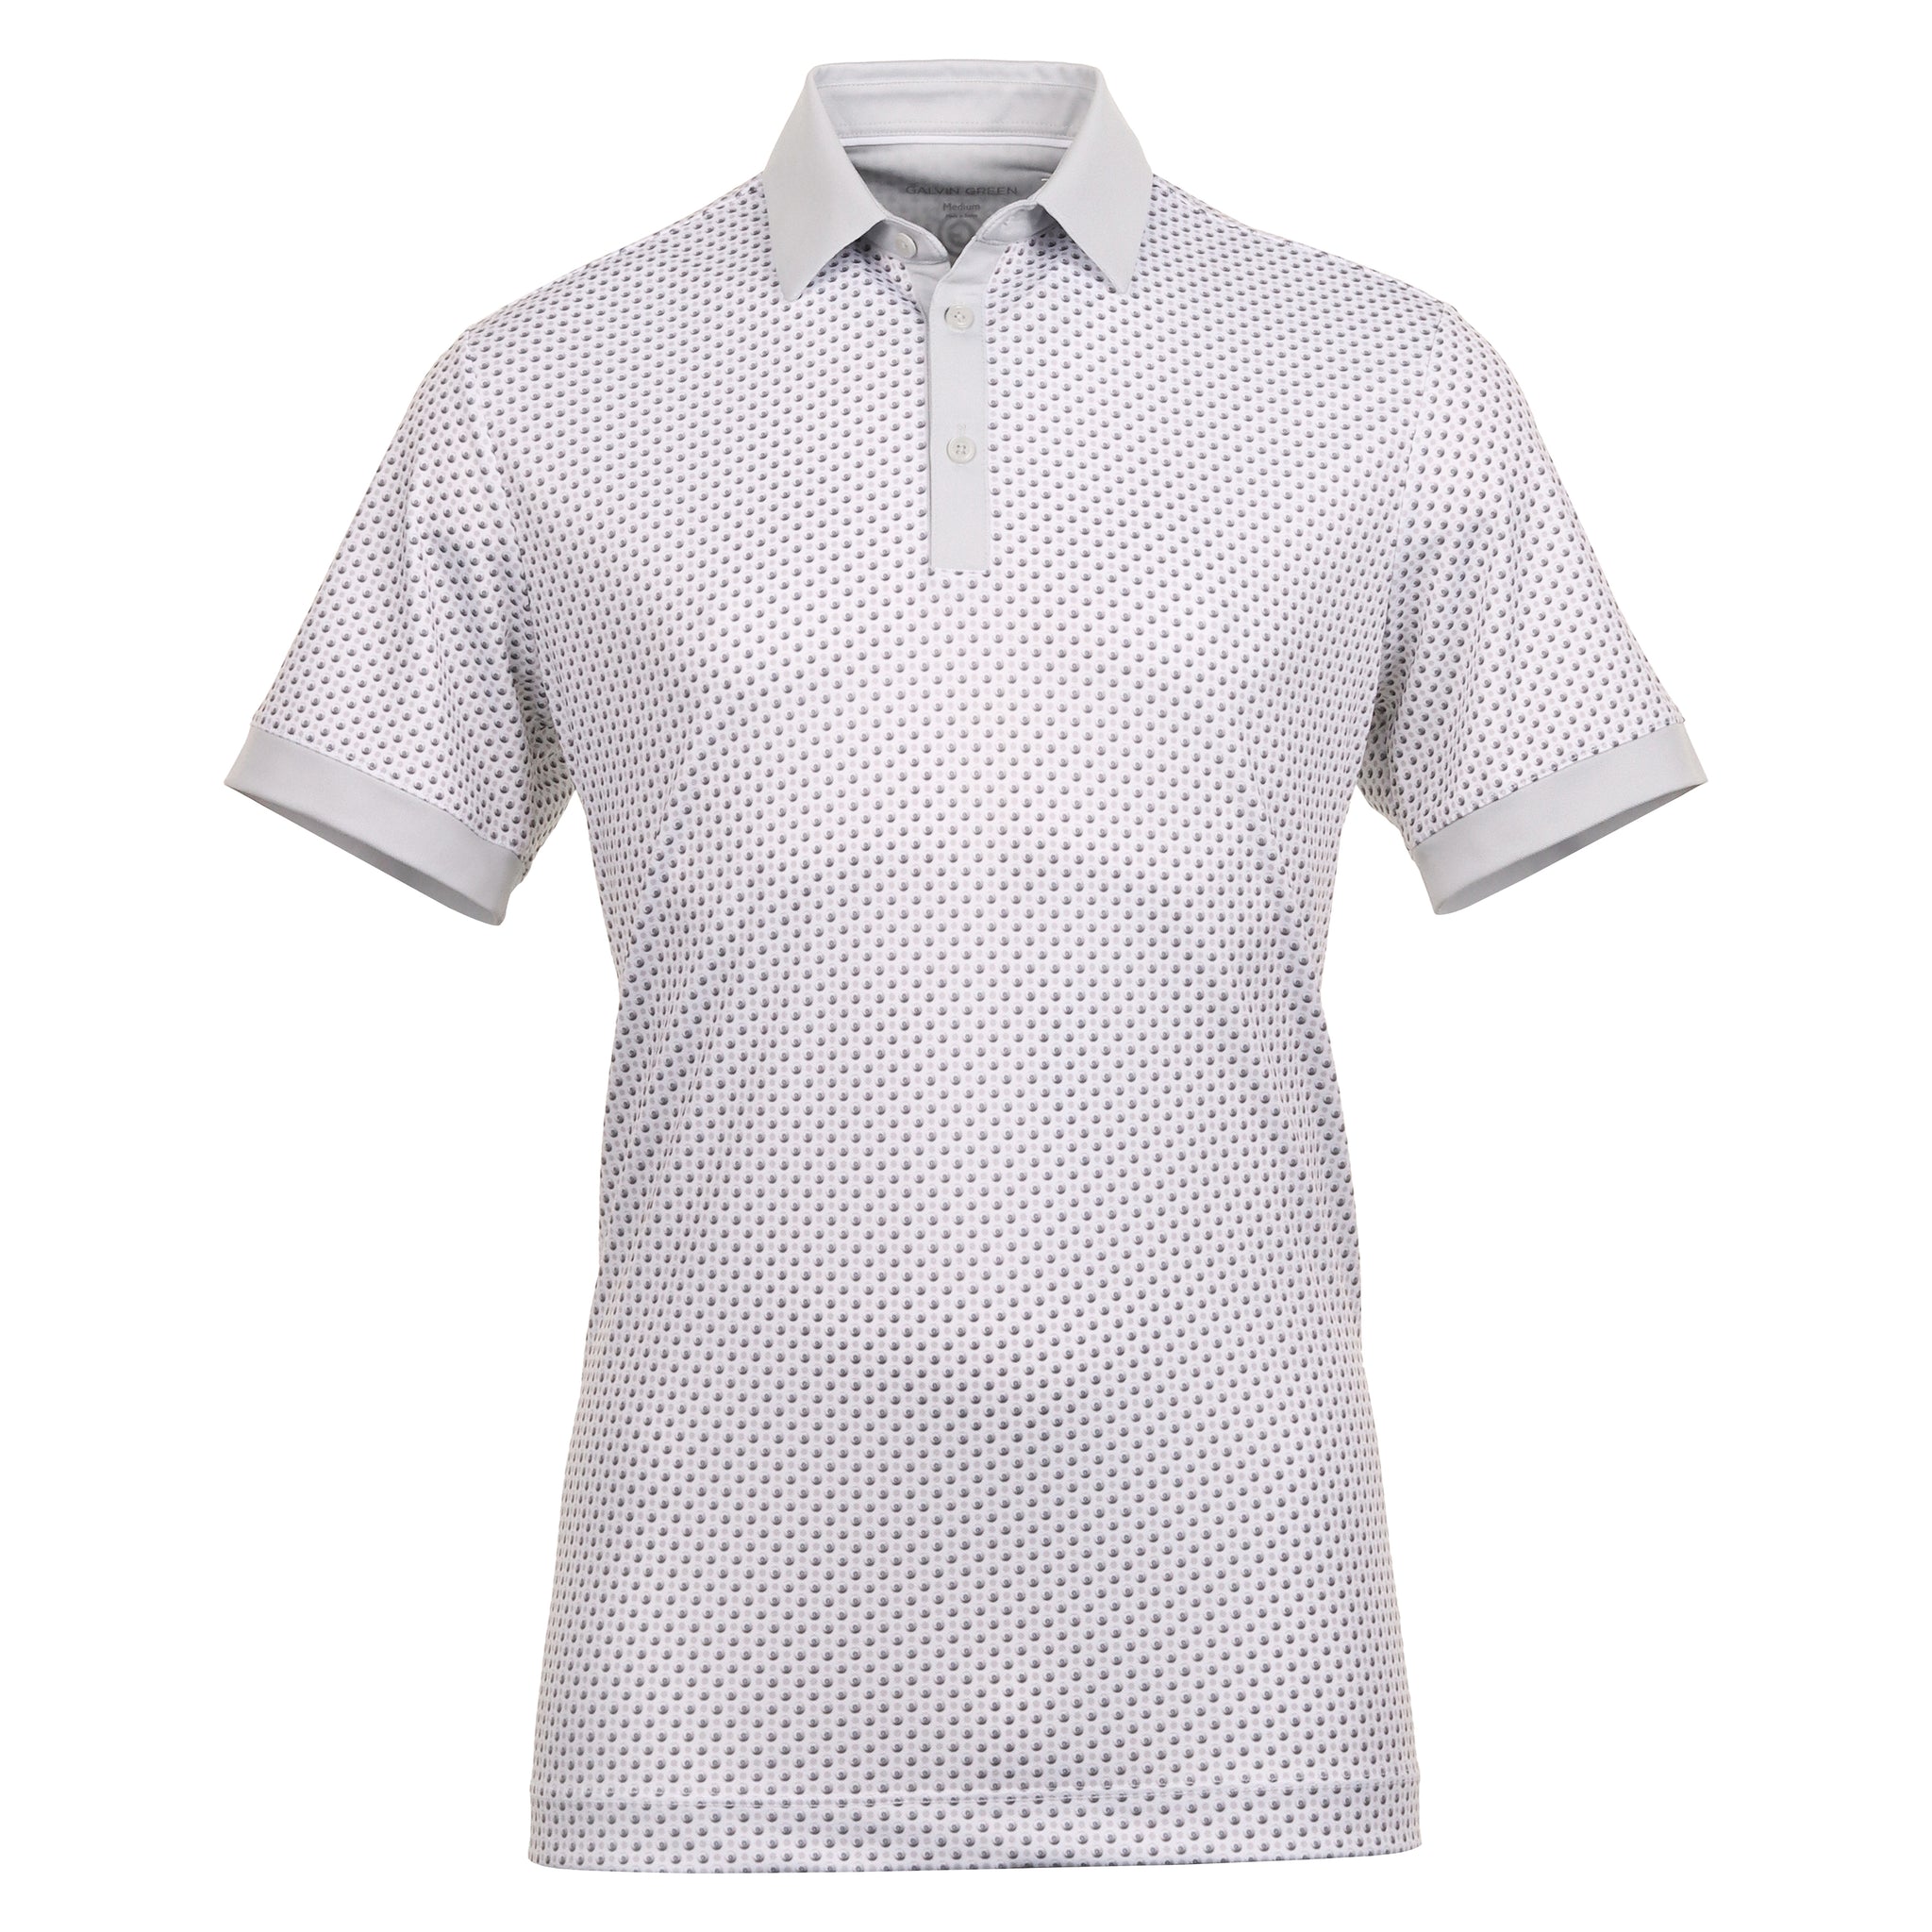 galvin-green-mate-ventil8-golf-shirt-white-cool-grey-9235